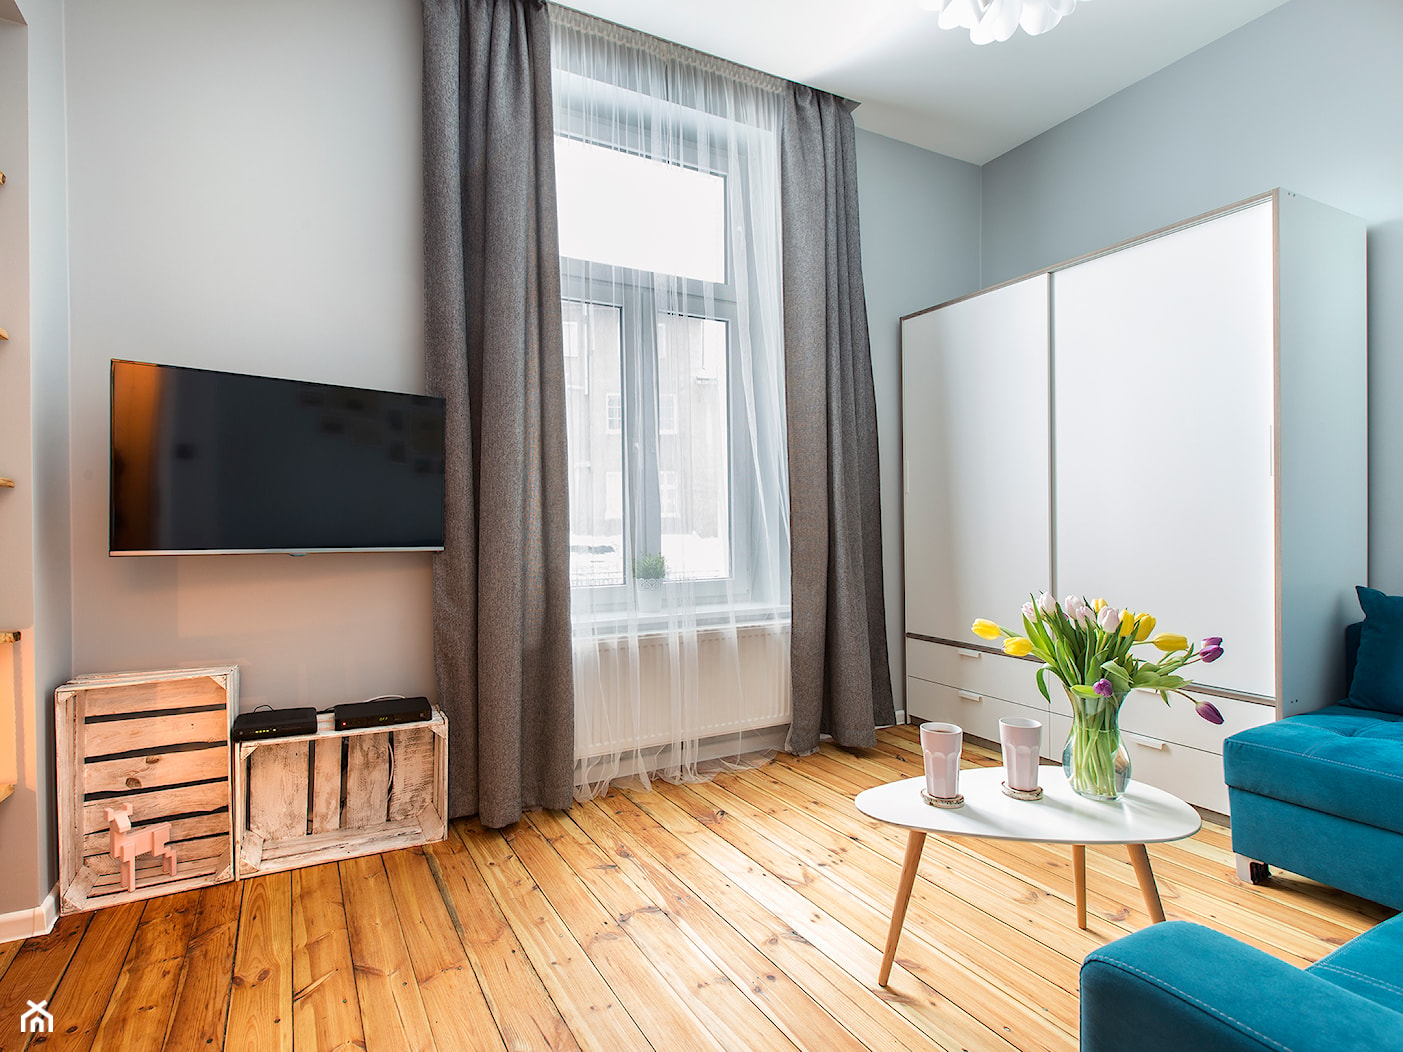 Apartament przy Monte Cassino Sopot - Mały salon - zdjęcie od Marina Apartments - Homebook